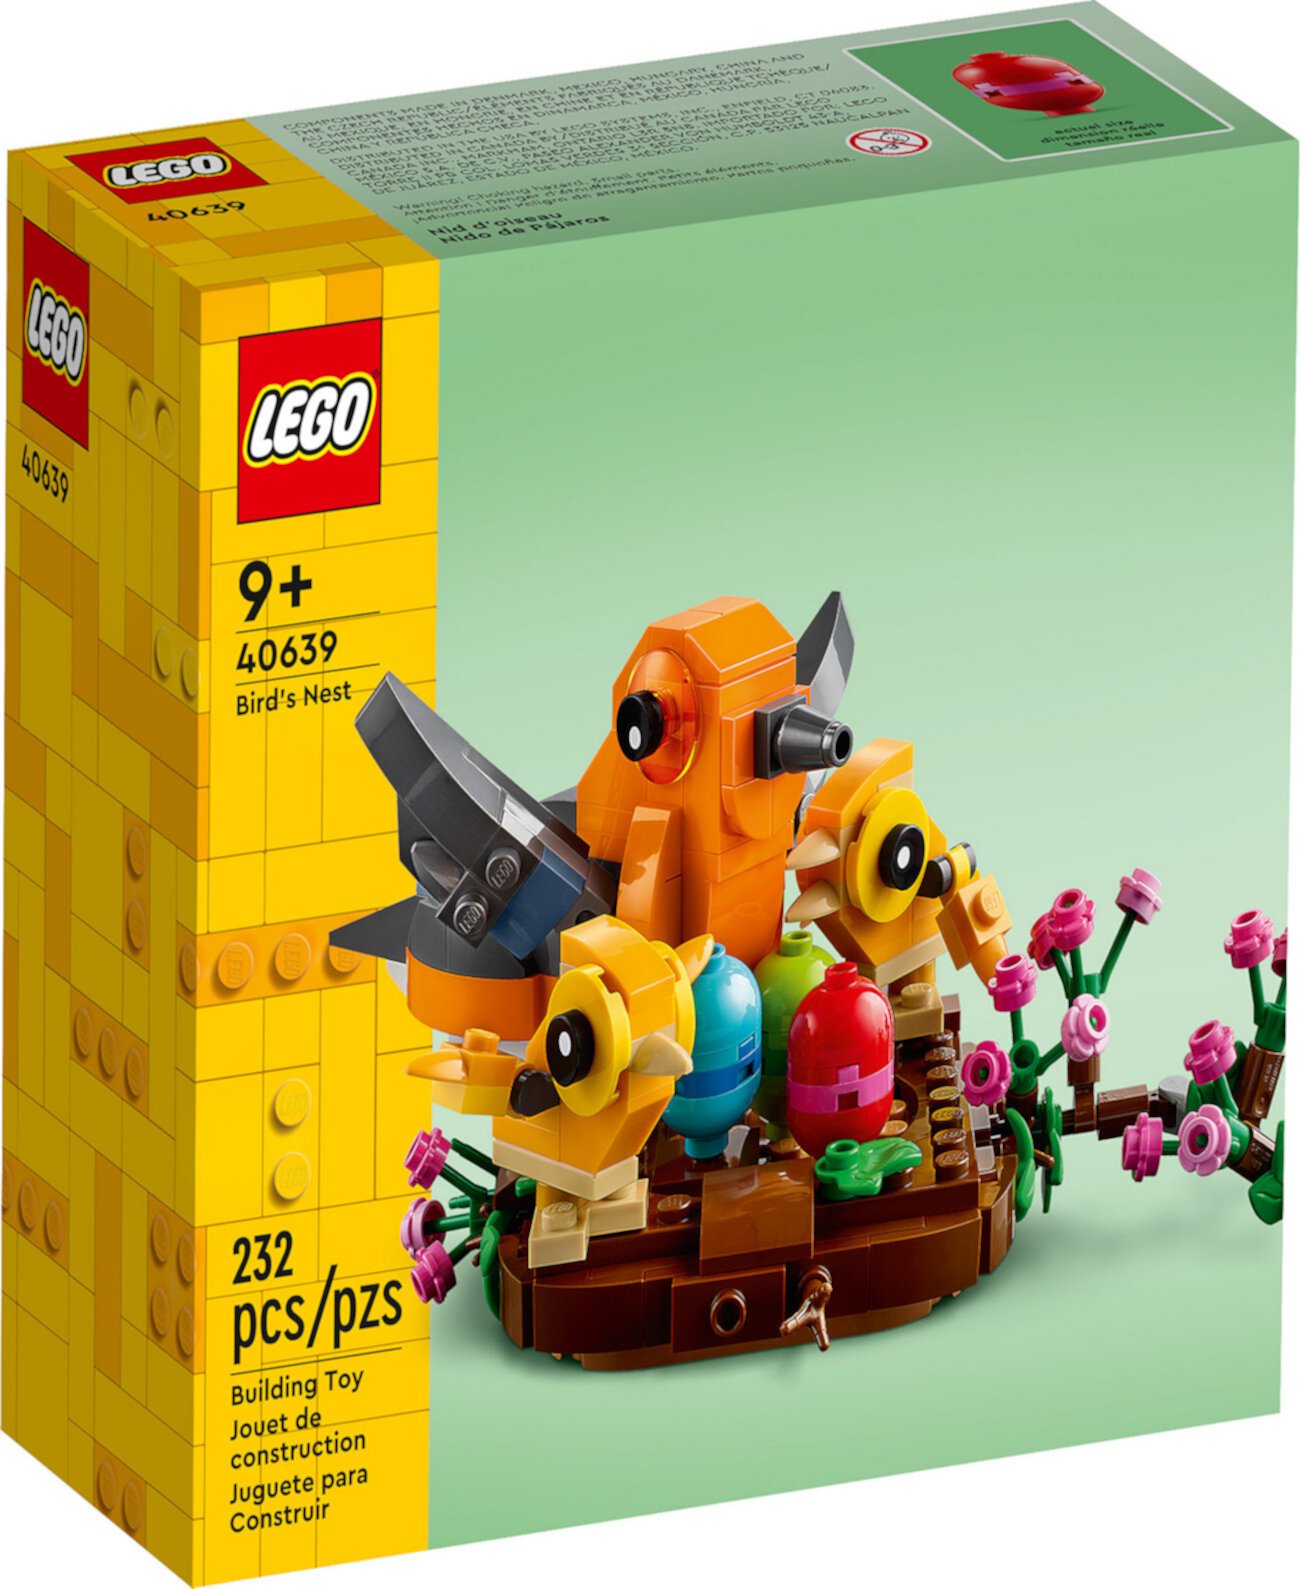 Iconic Bird's Nest 40639 Building Set, 232 Pieces Lego